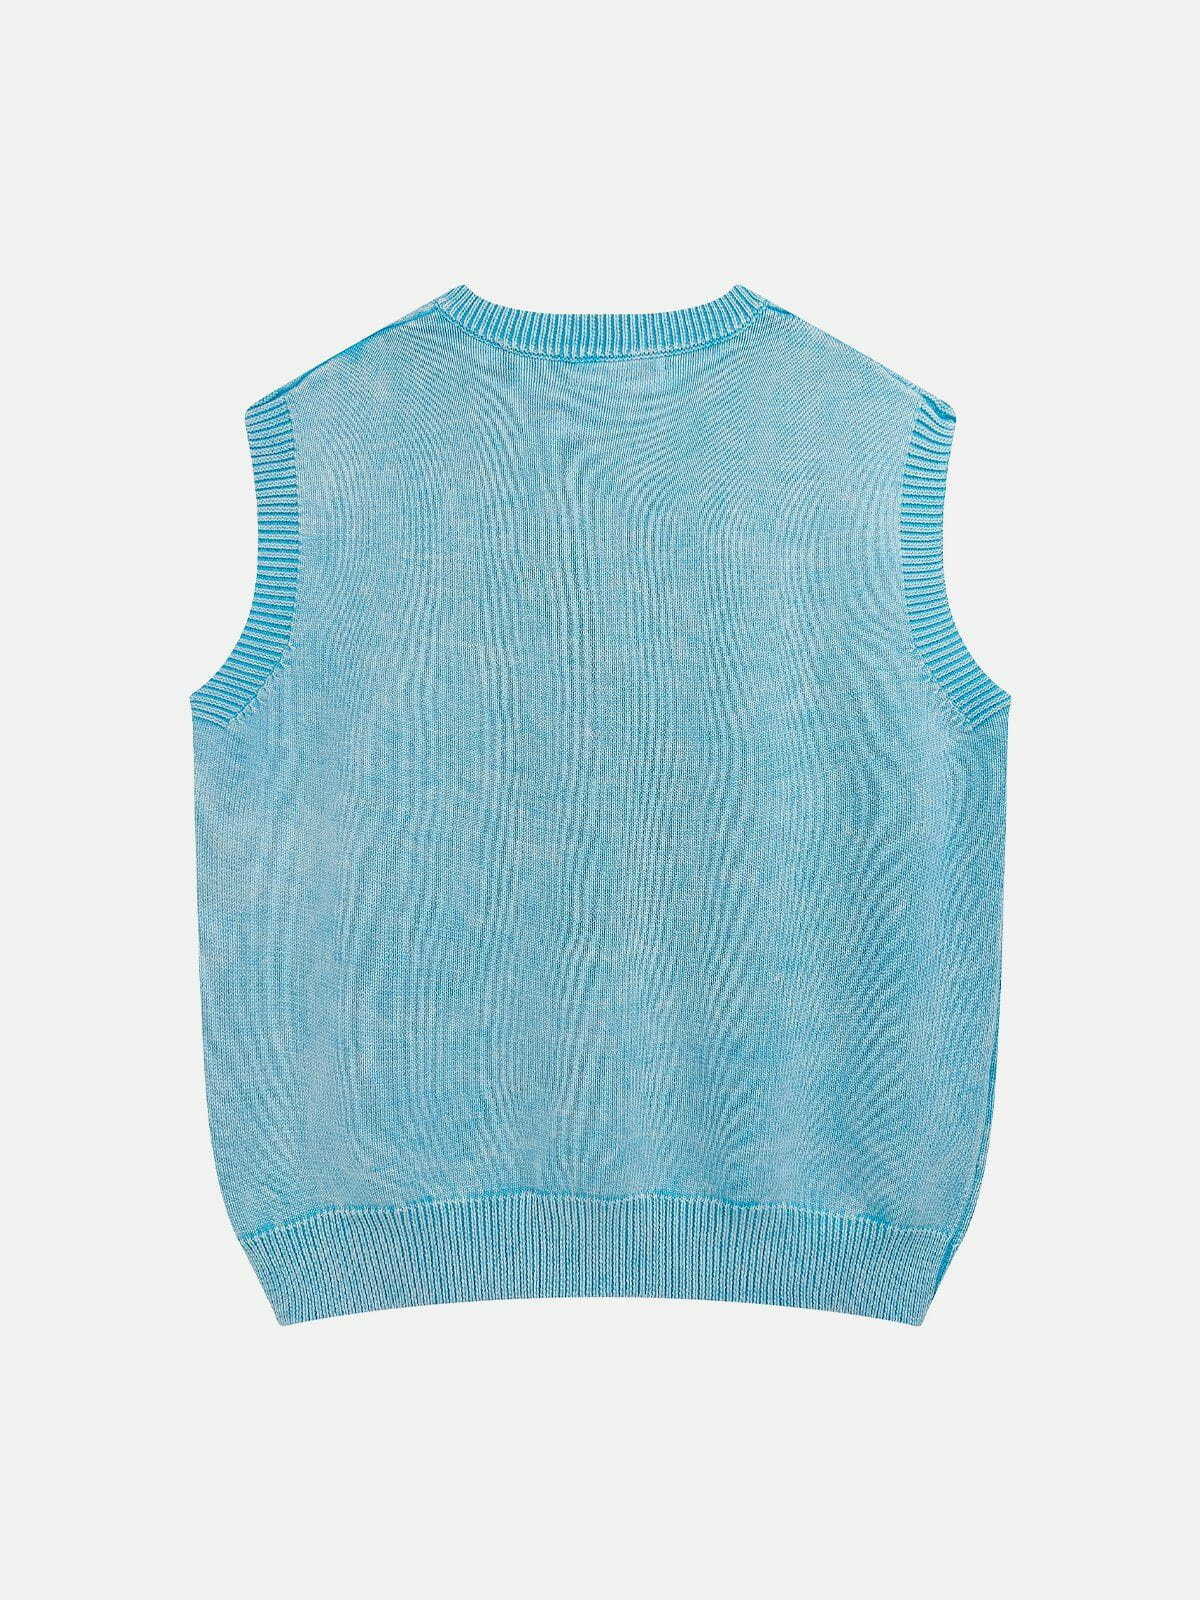 embroidered letter sweater vest y2k streetwear essential 1912